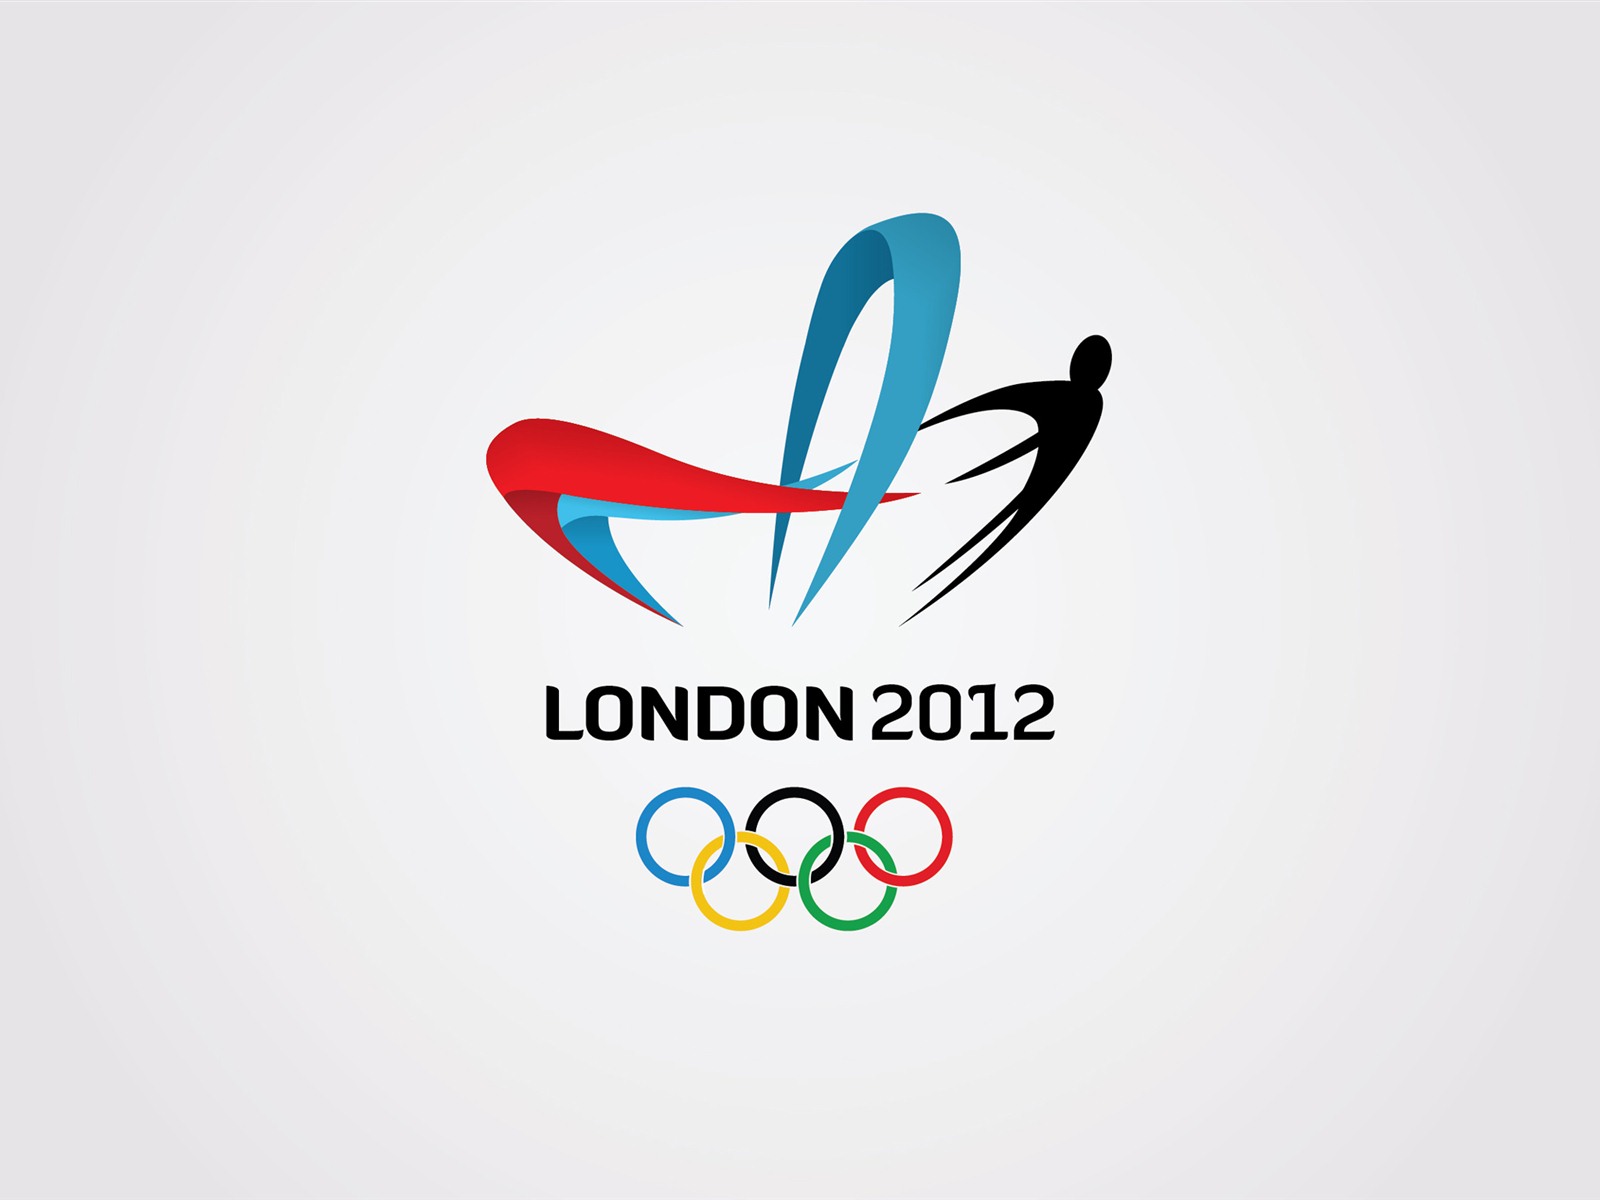 London 2012 Olympics theme wallpapers (2) #25 - 1600x1200